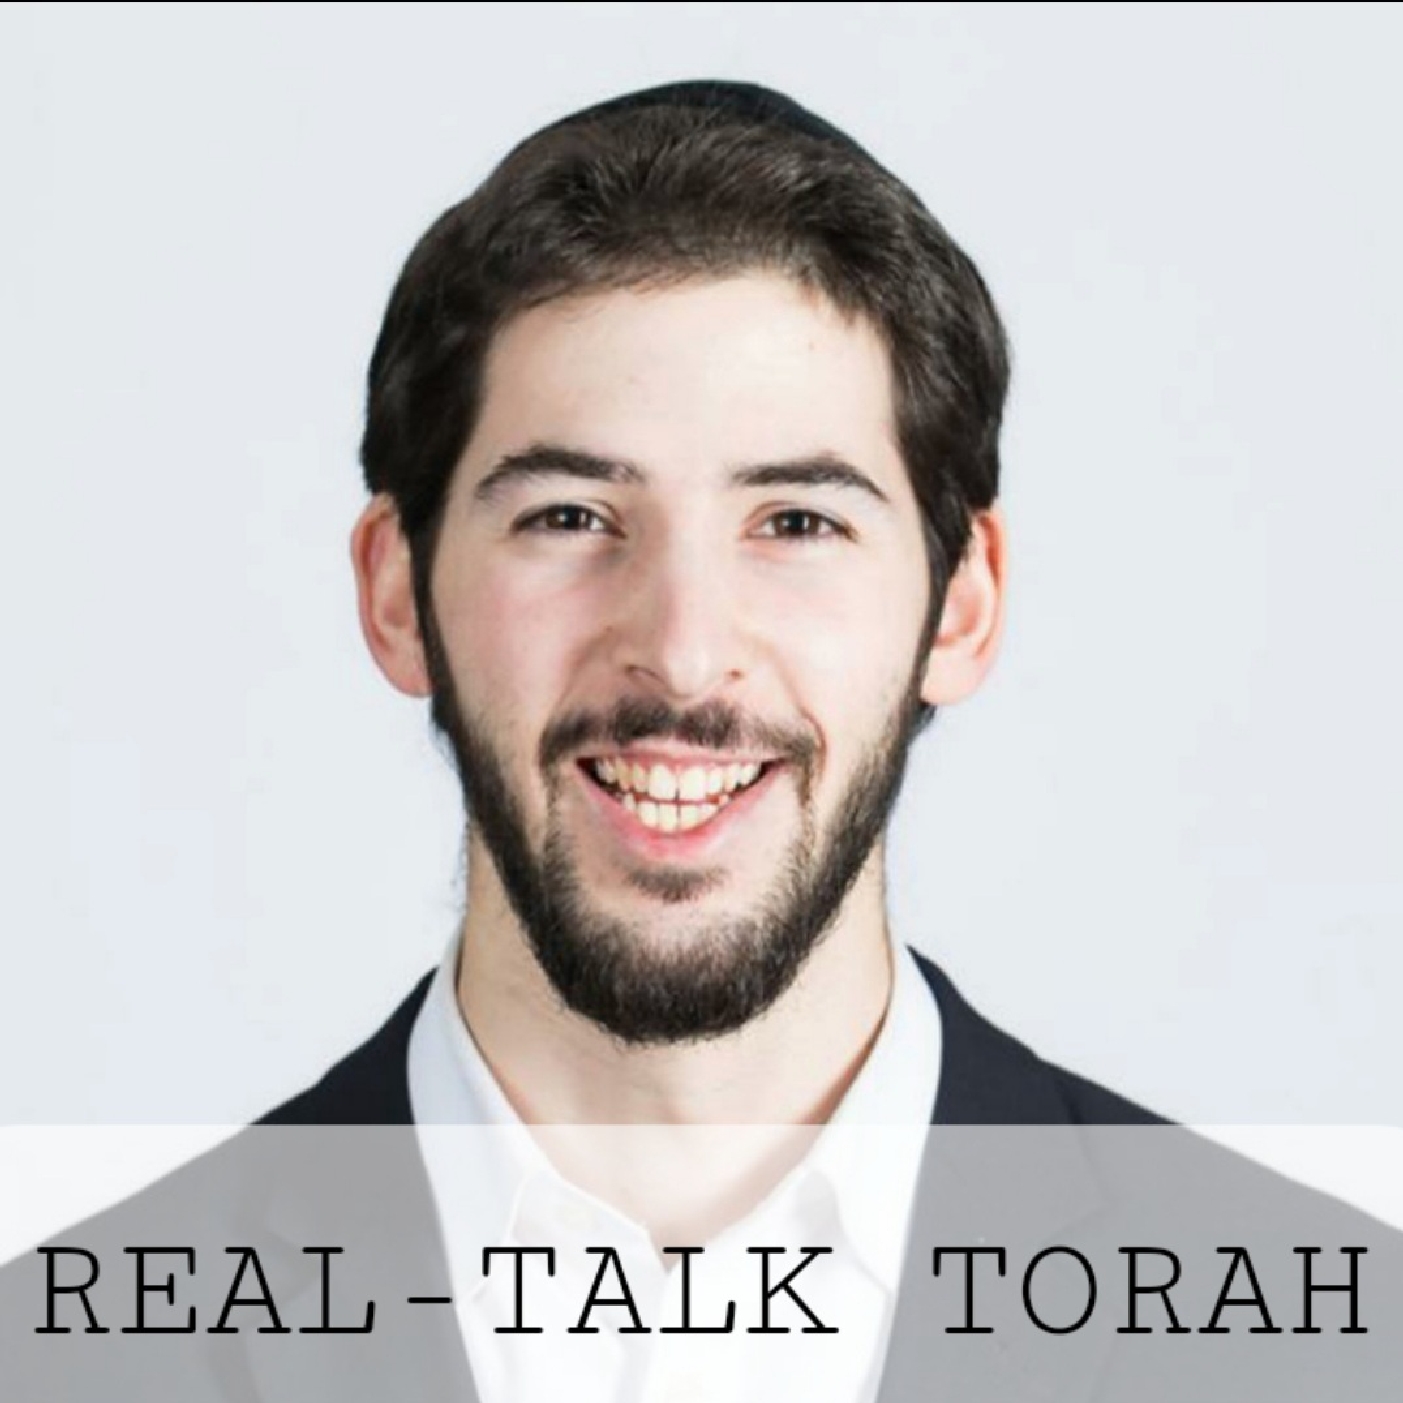 Real-Talk Torah: What is the Torah’s View of Free Speech? 🙊